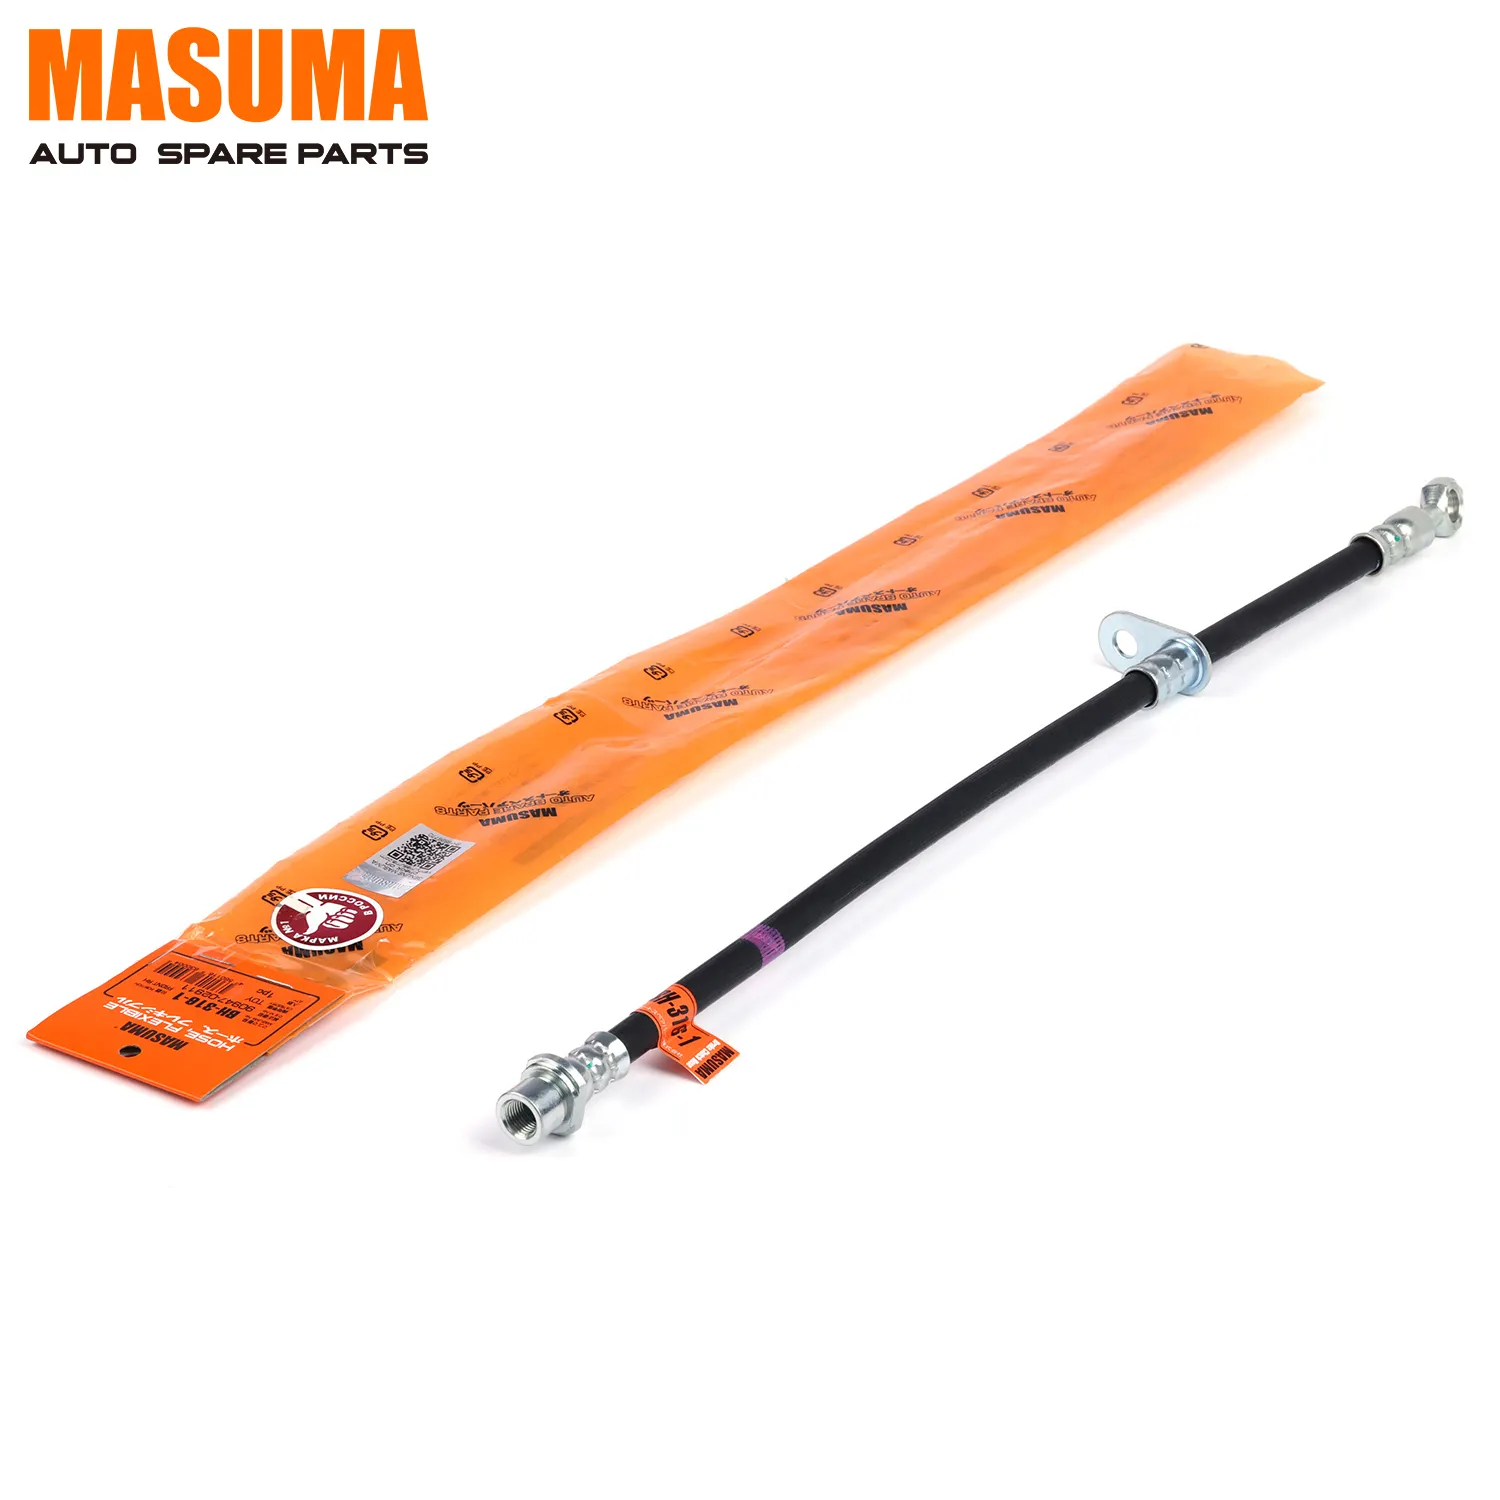 BH-316-1 MASUMA Automotive brake system Replacement part Hydraulic Brake Hose 90947-02659 90947-02910 for TOYOTA COROLLA